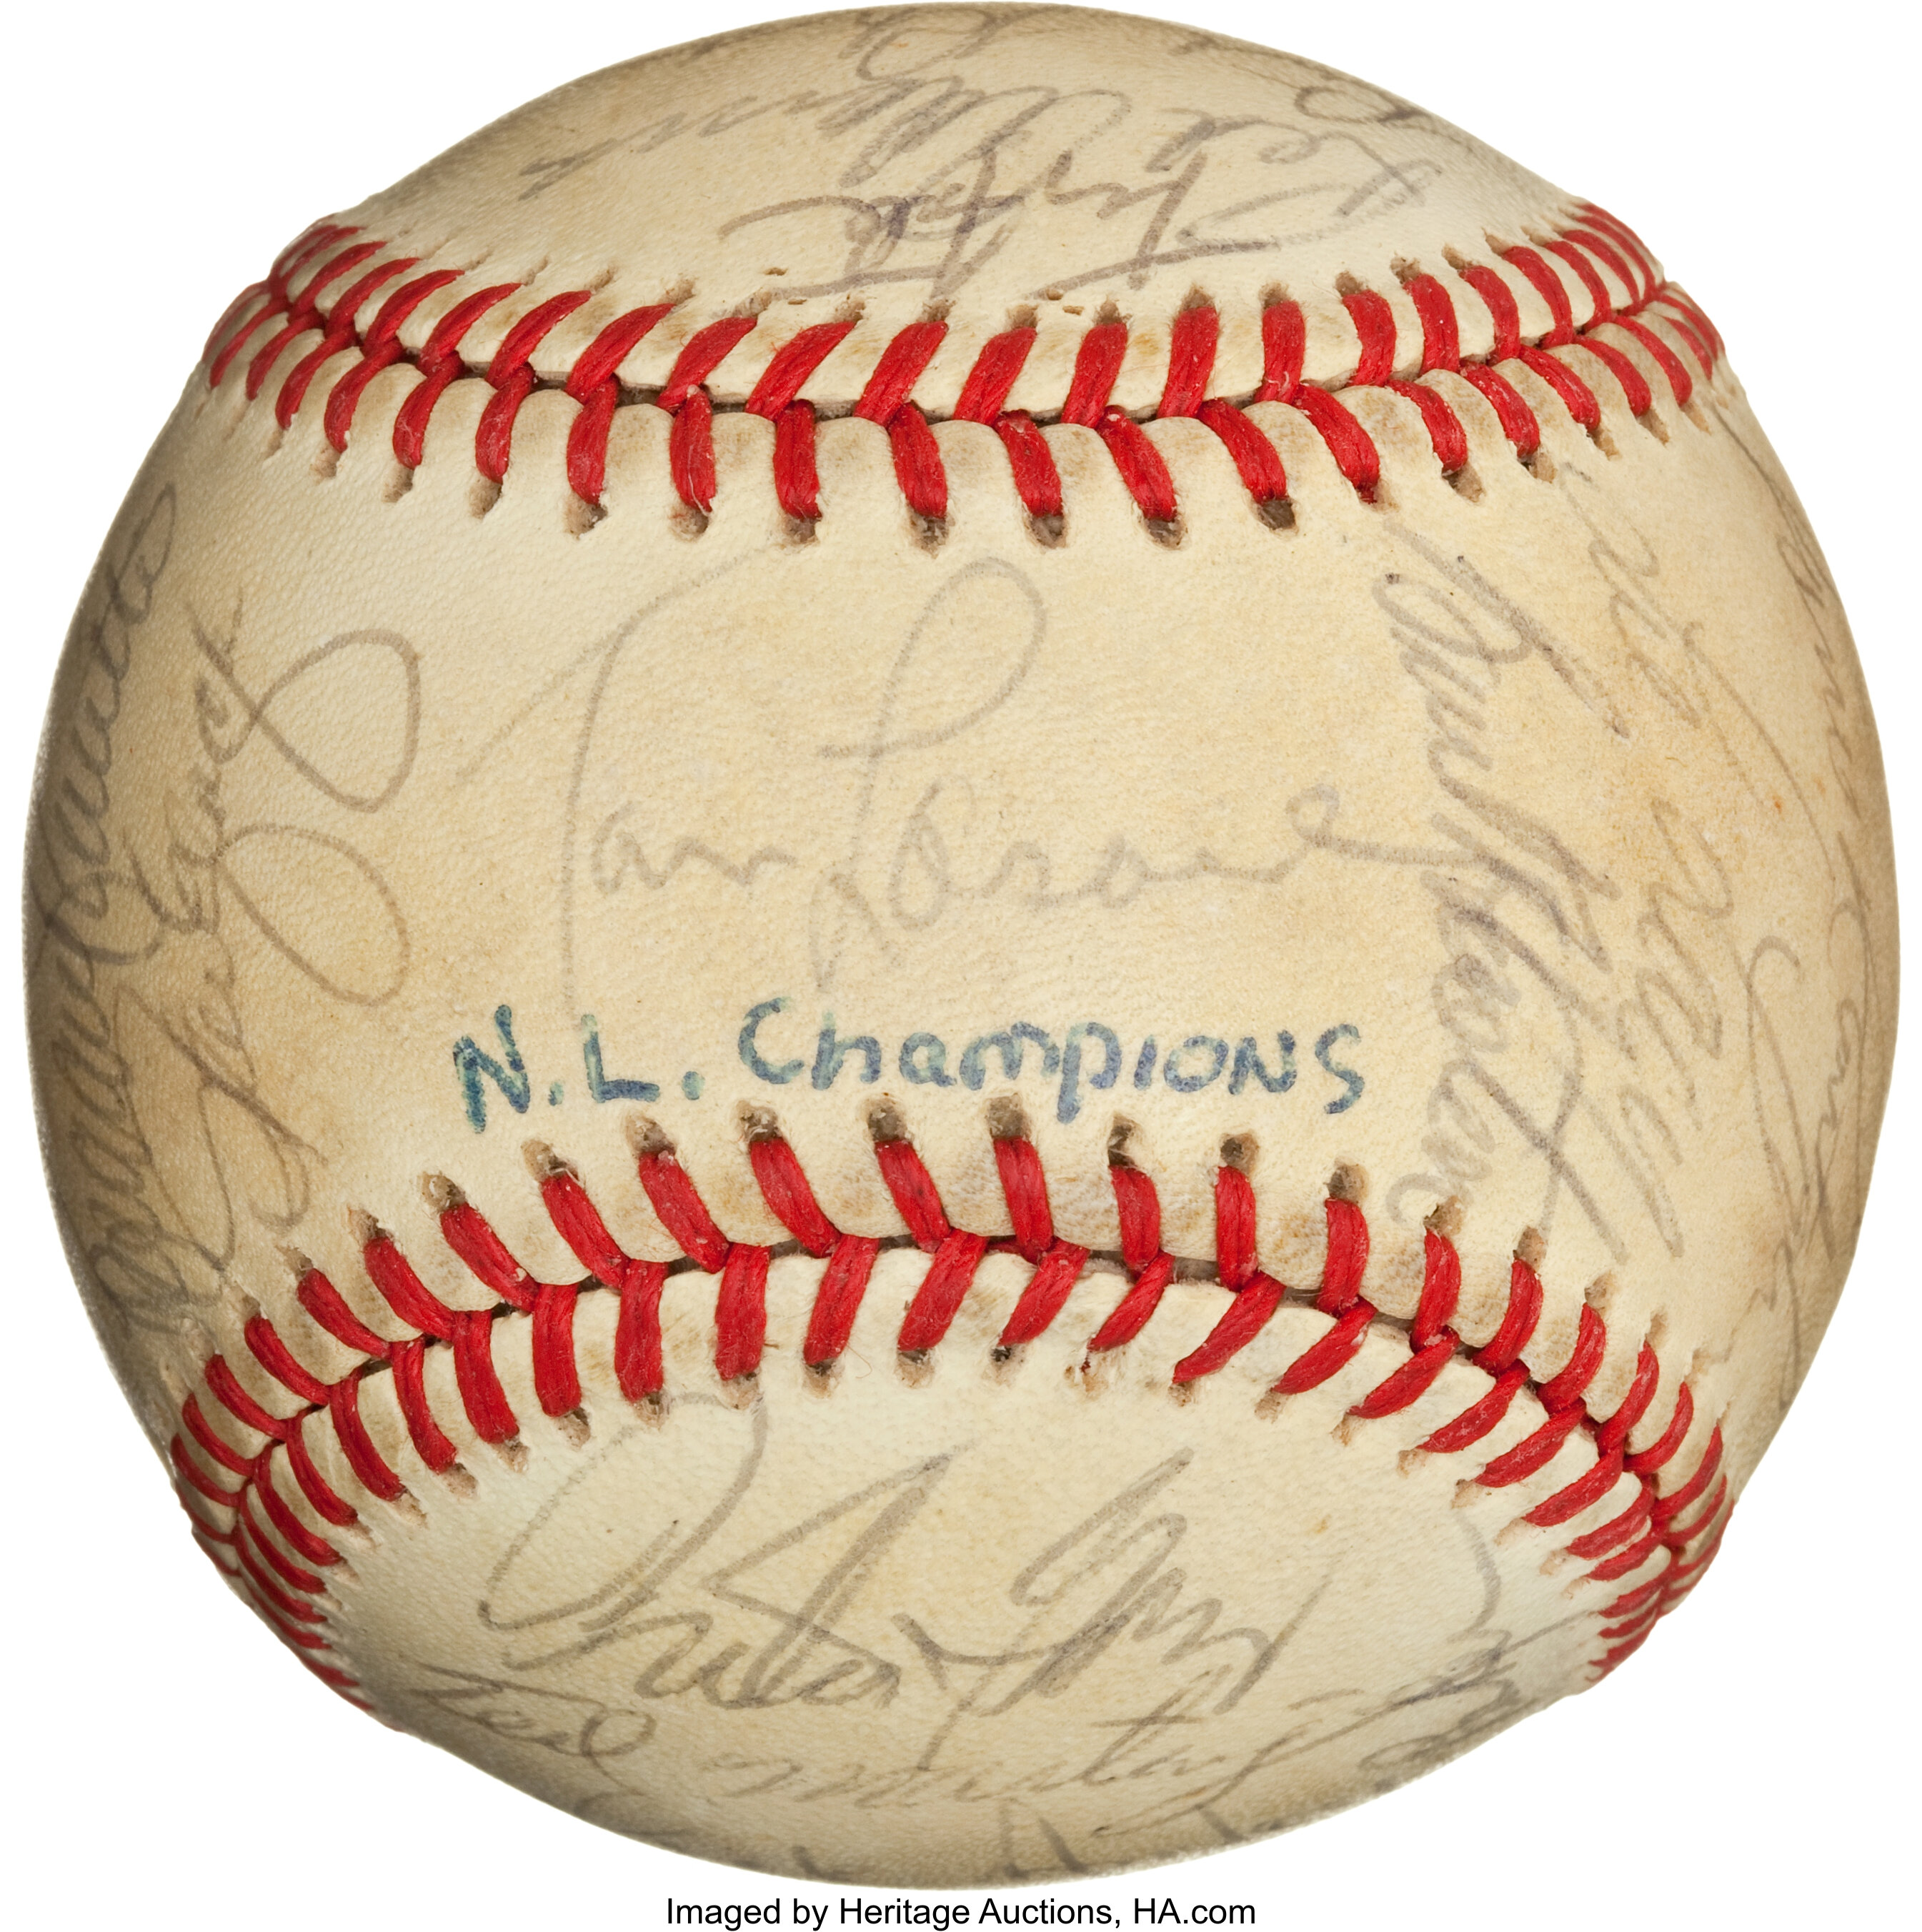 Original The Los Angeles Dodgers Baseball Abbey Road Signatures